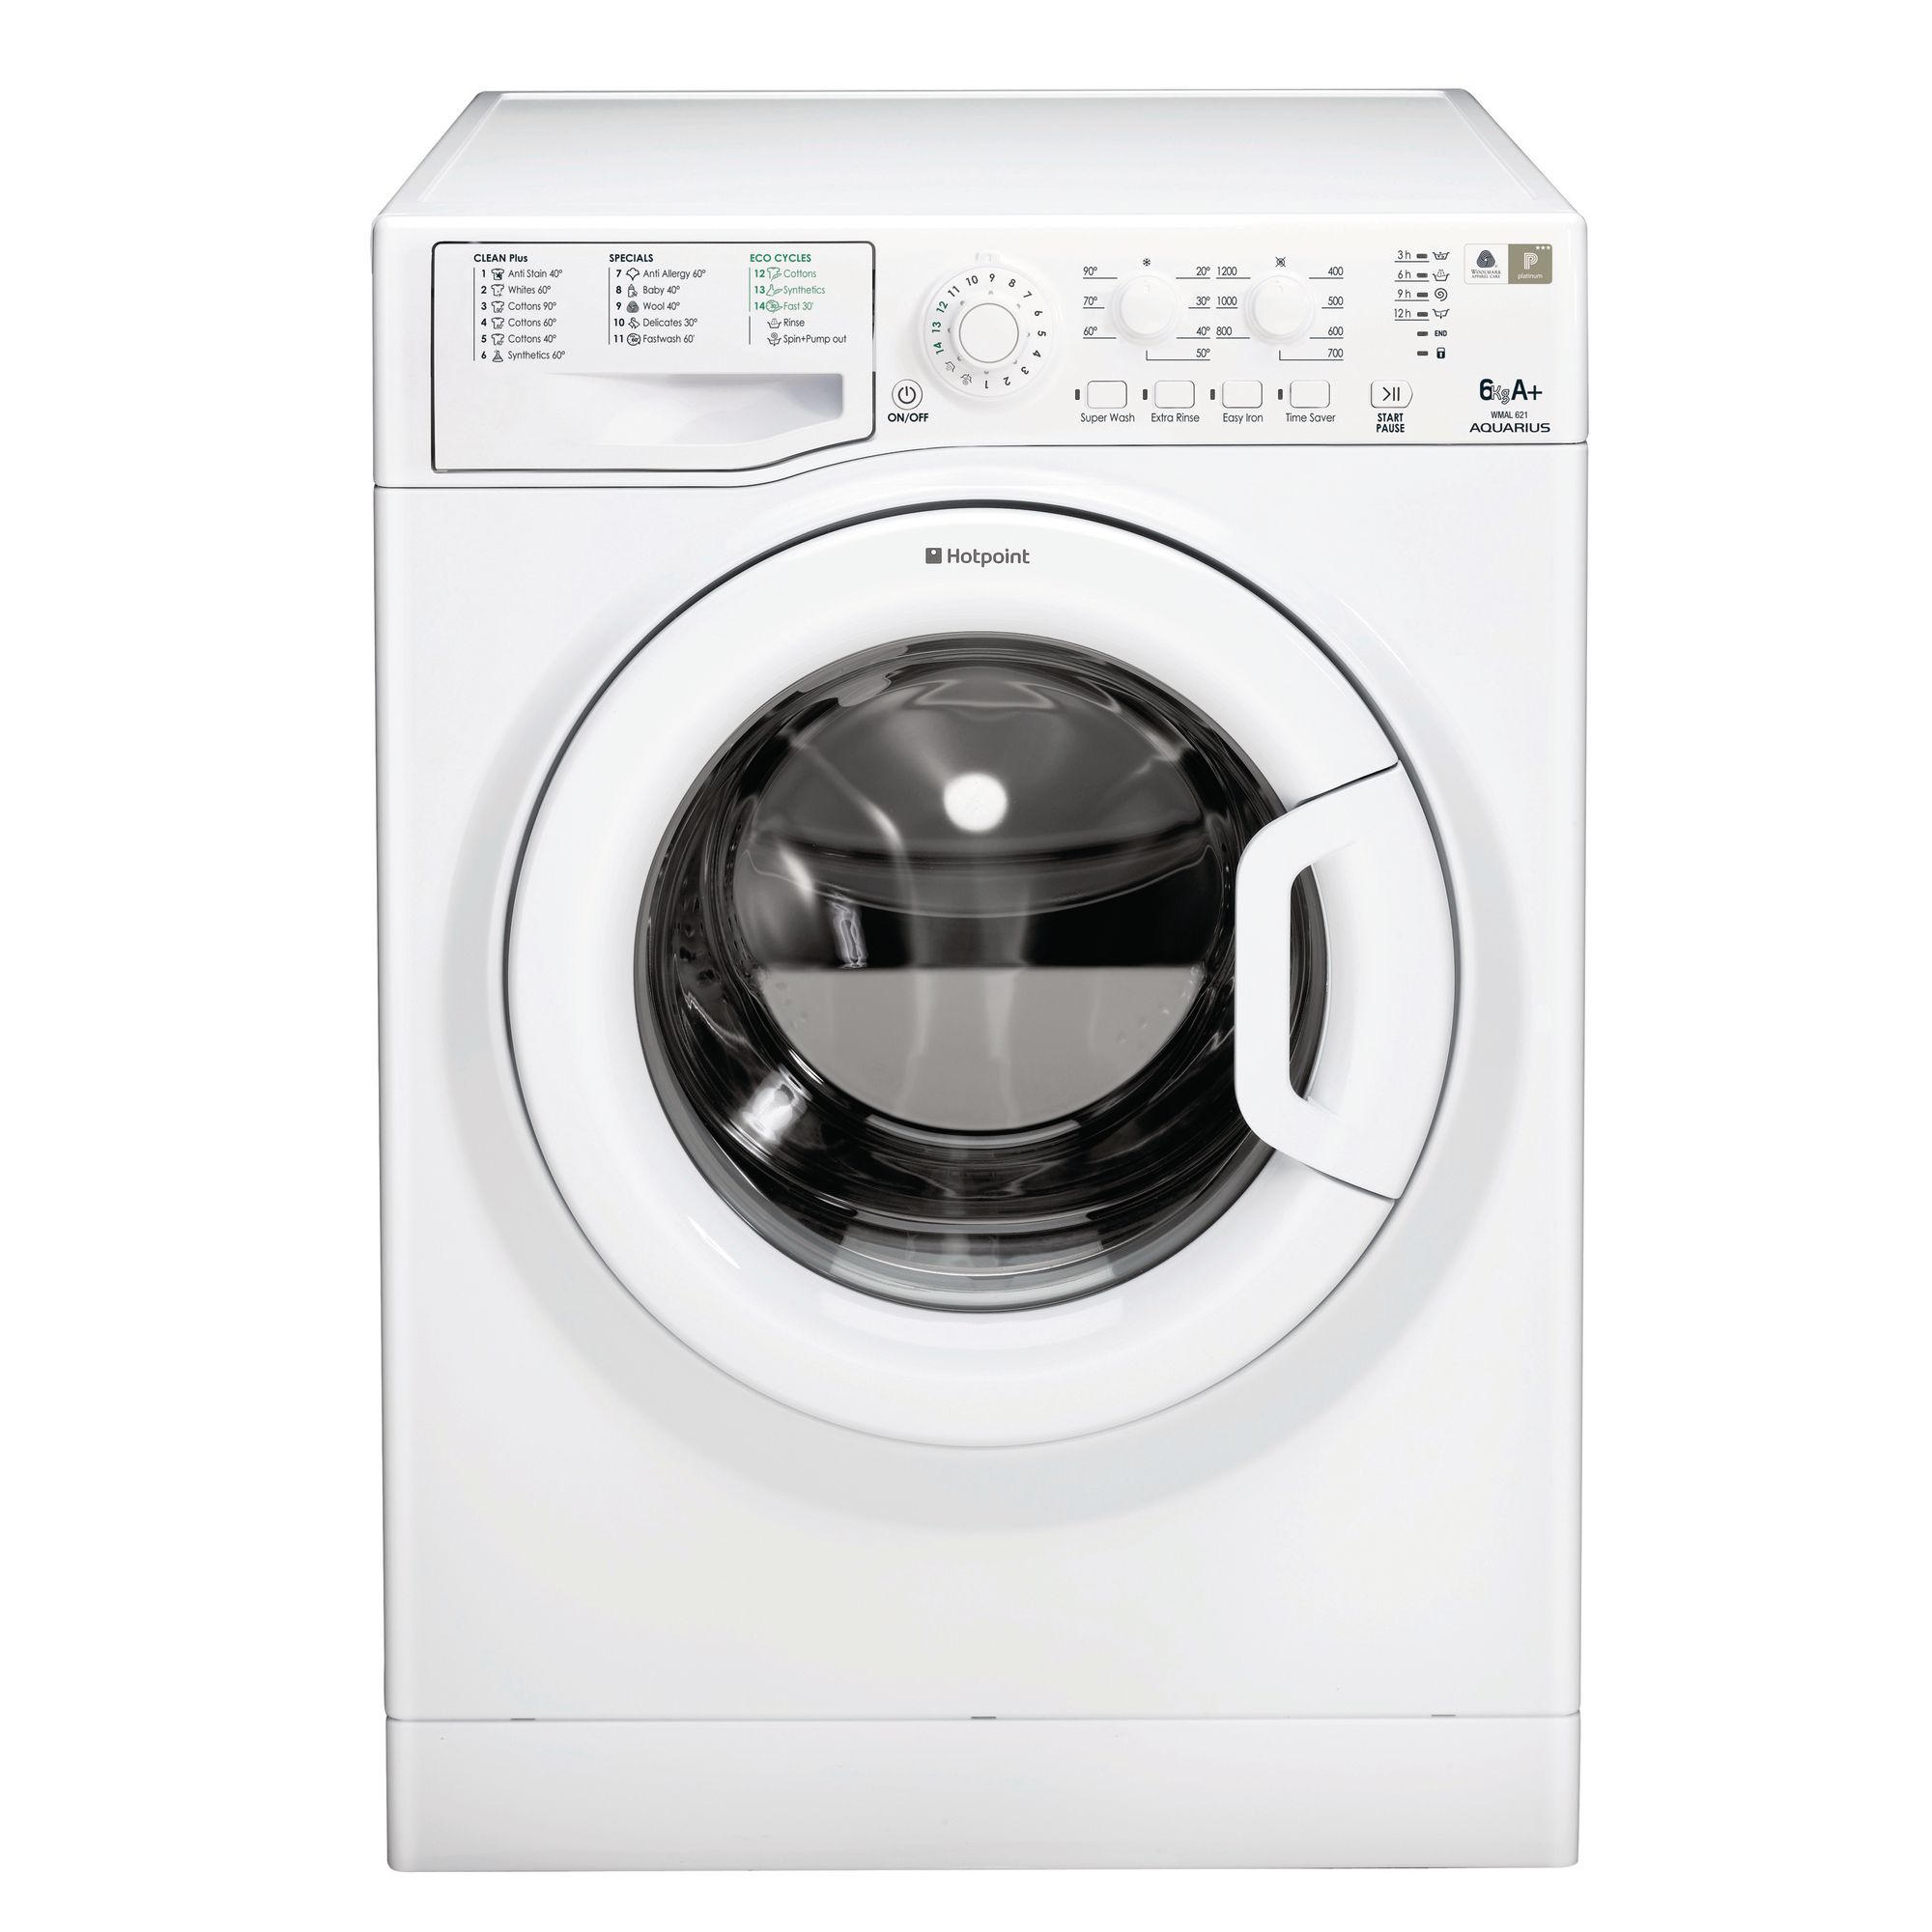 Hotpoint Washing Machine 1200 Spin